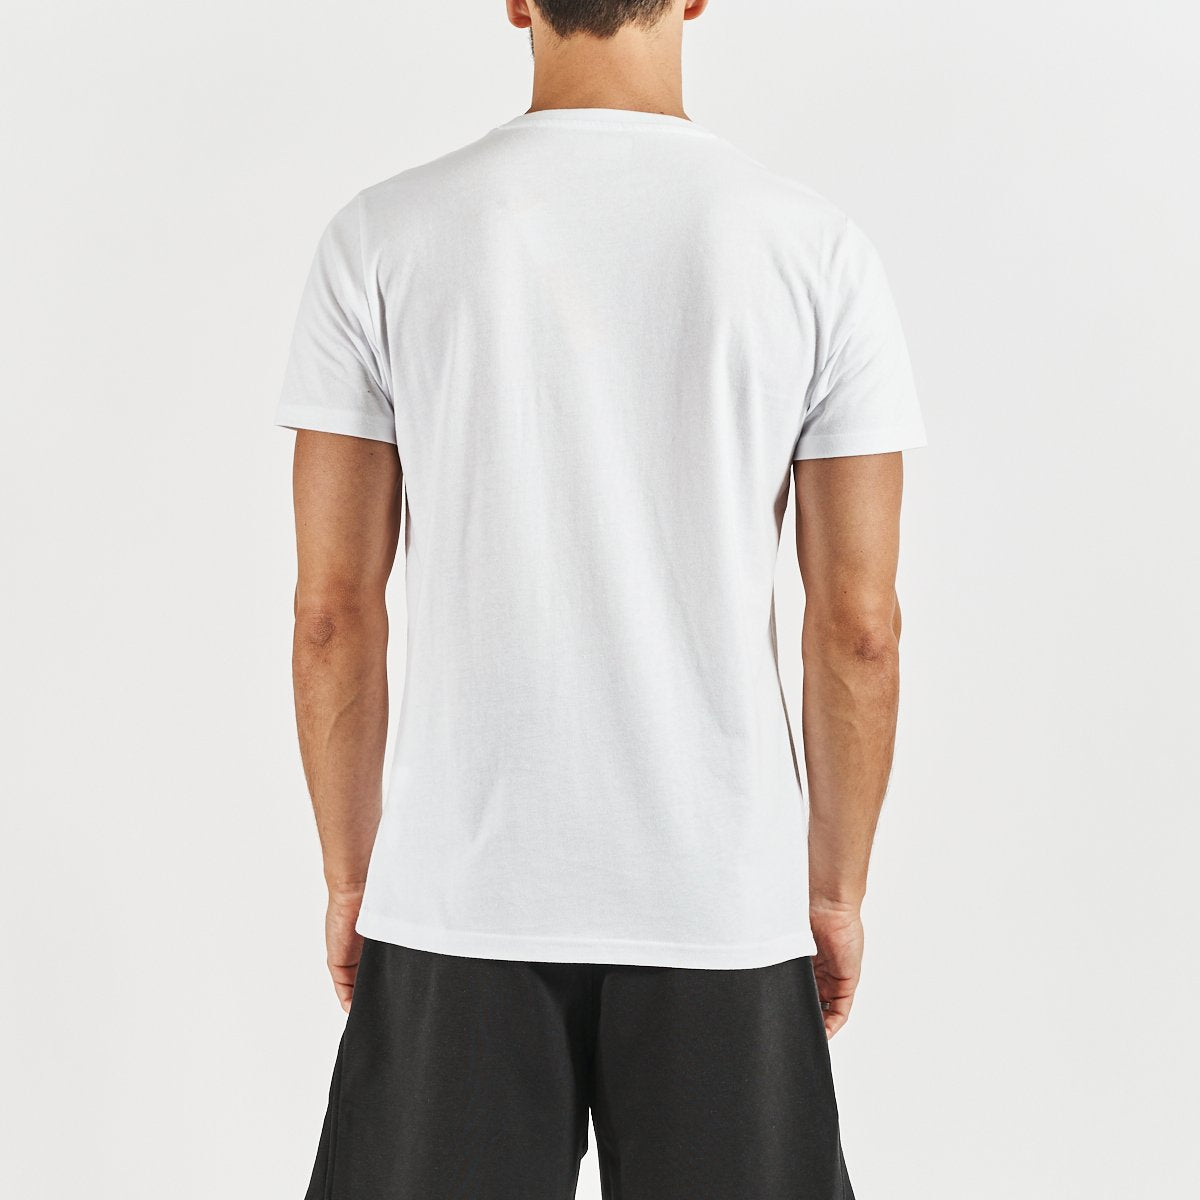 Camiseta Kouk hombre blanco - Imagen 3